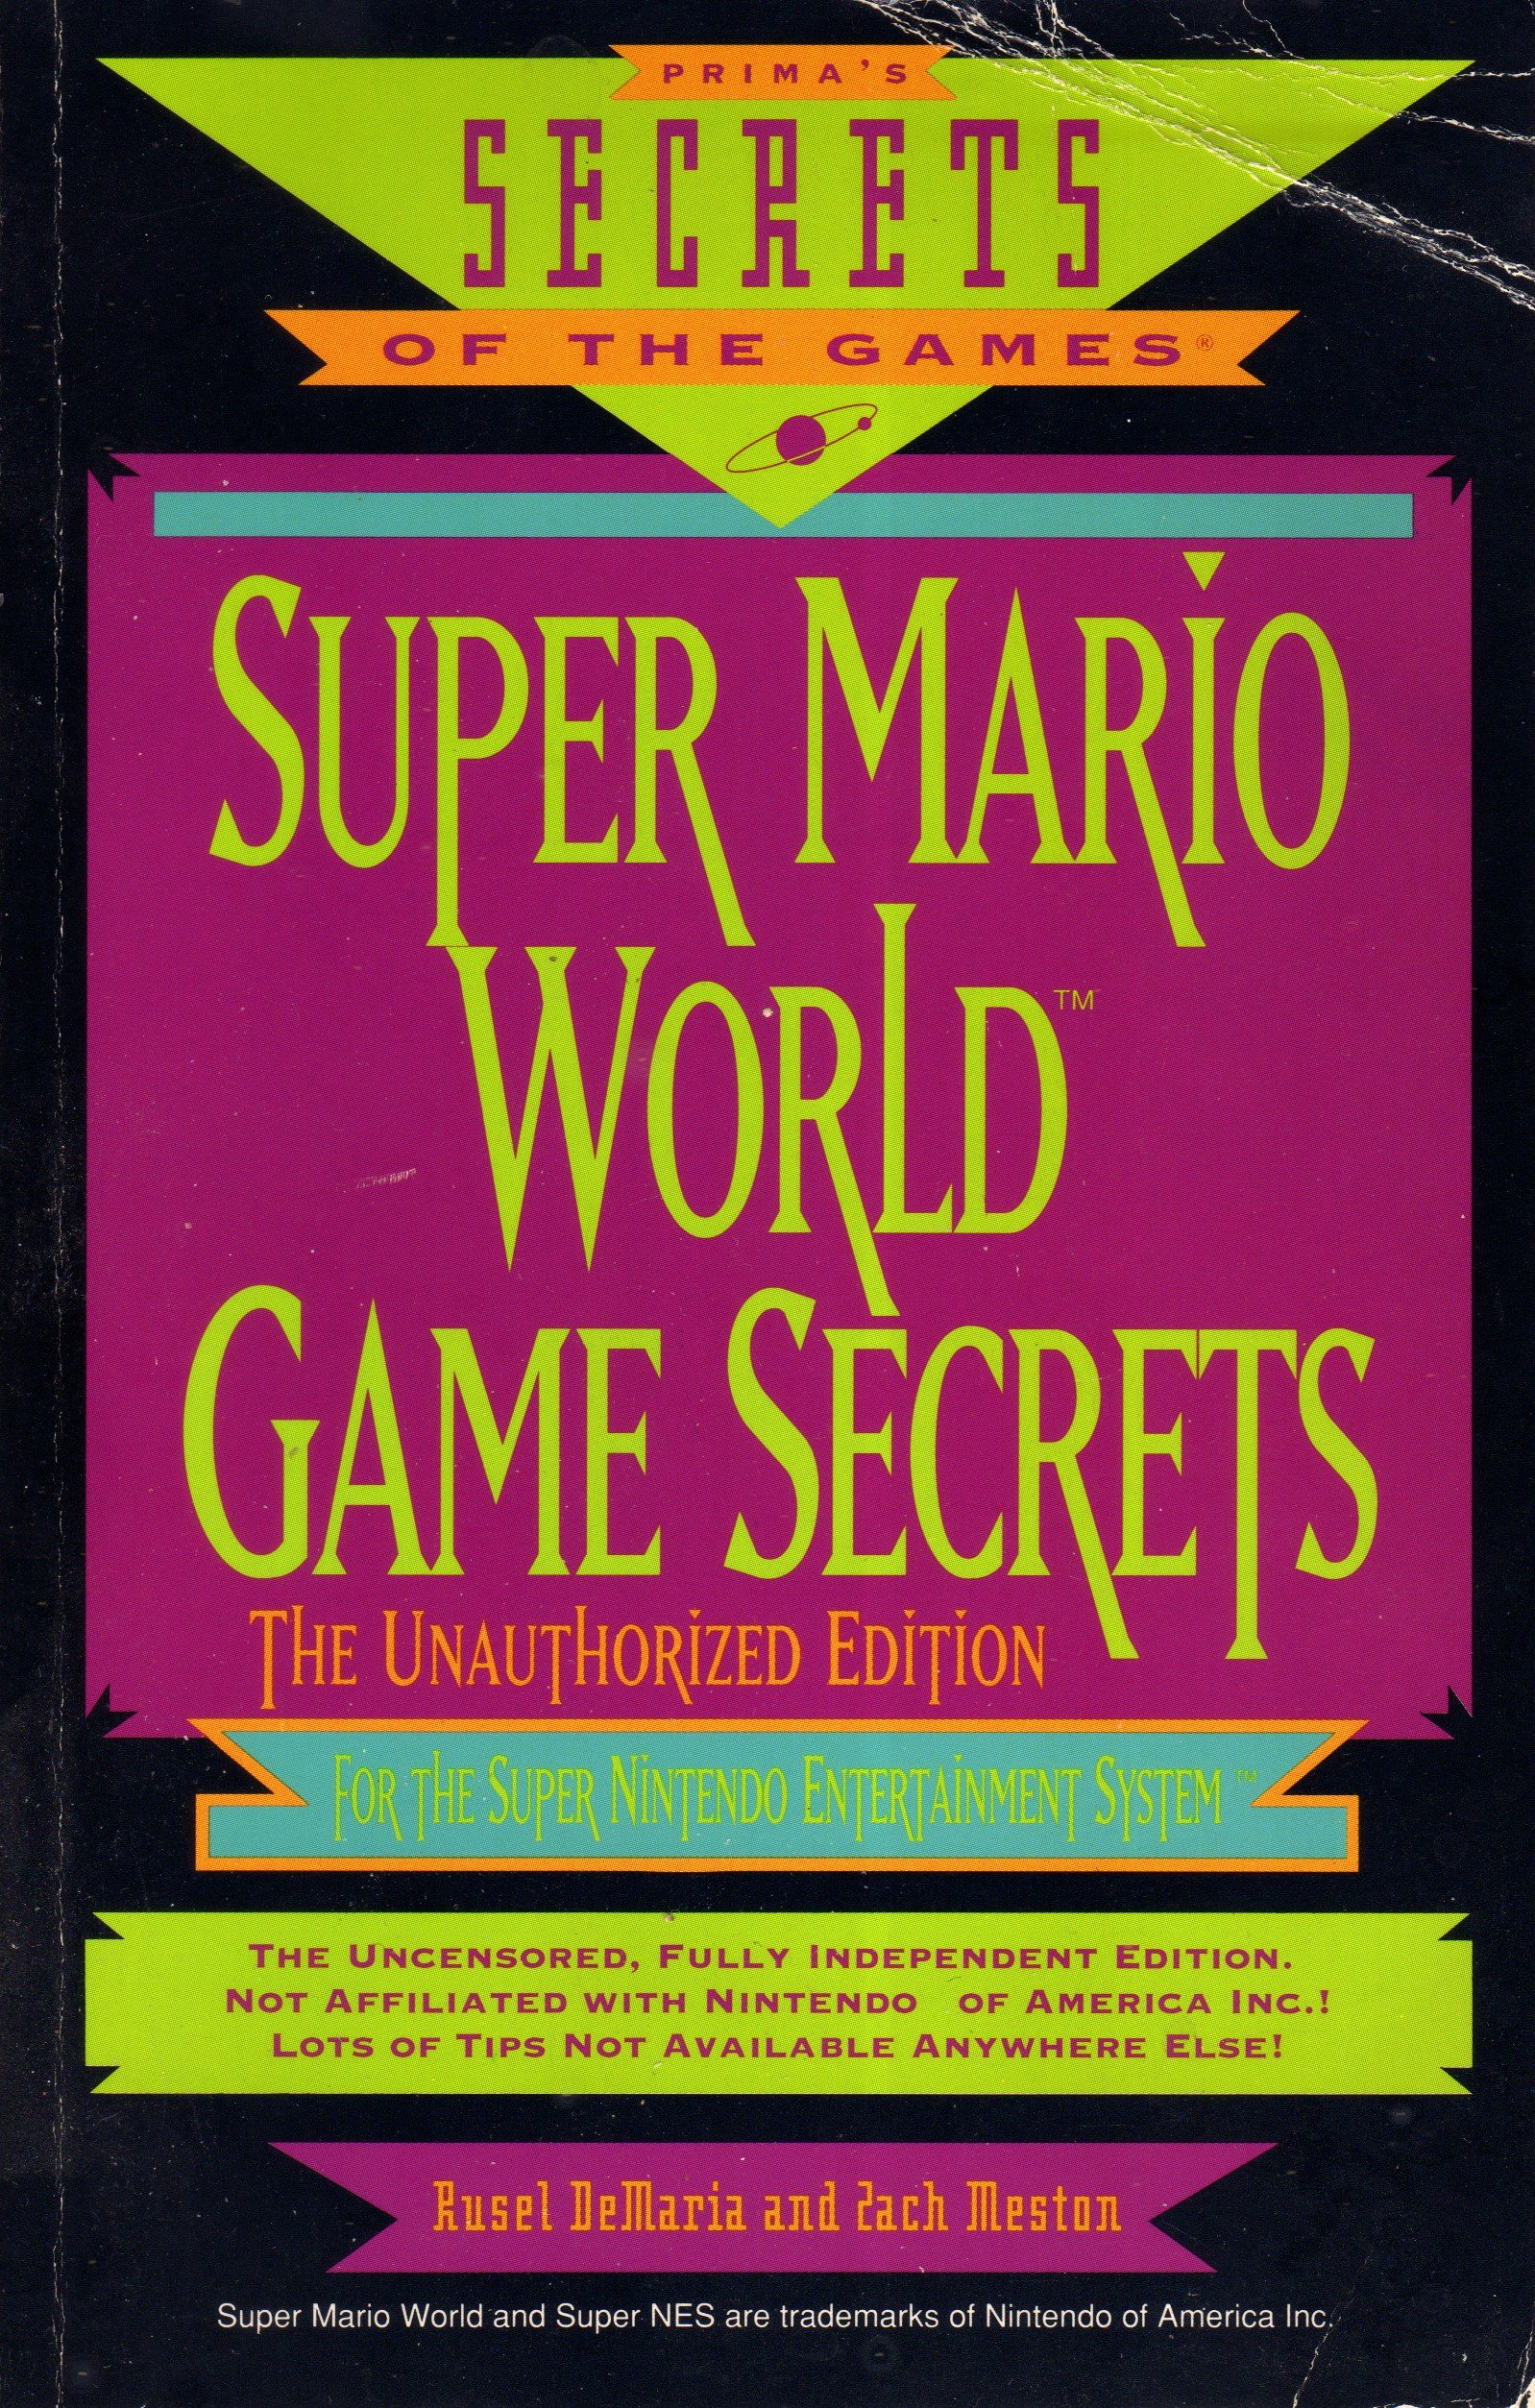 Super Mario World Game Secrets: The Unauthorized Edition